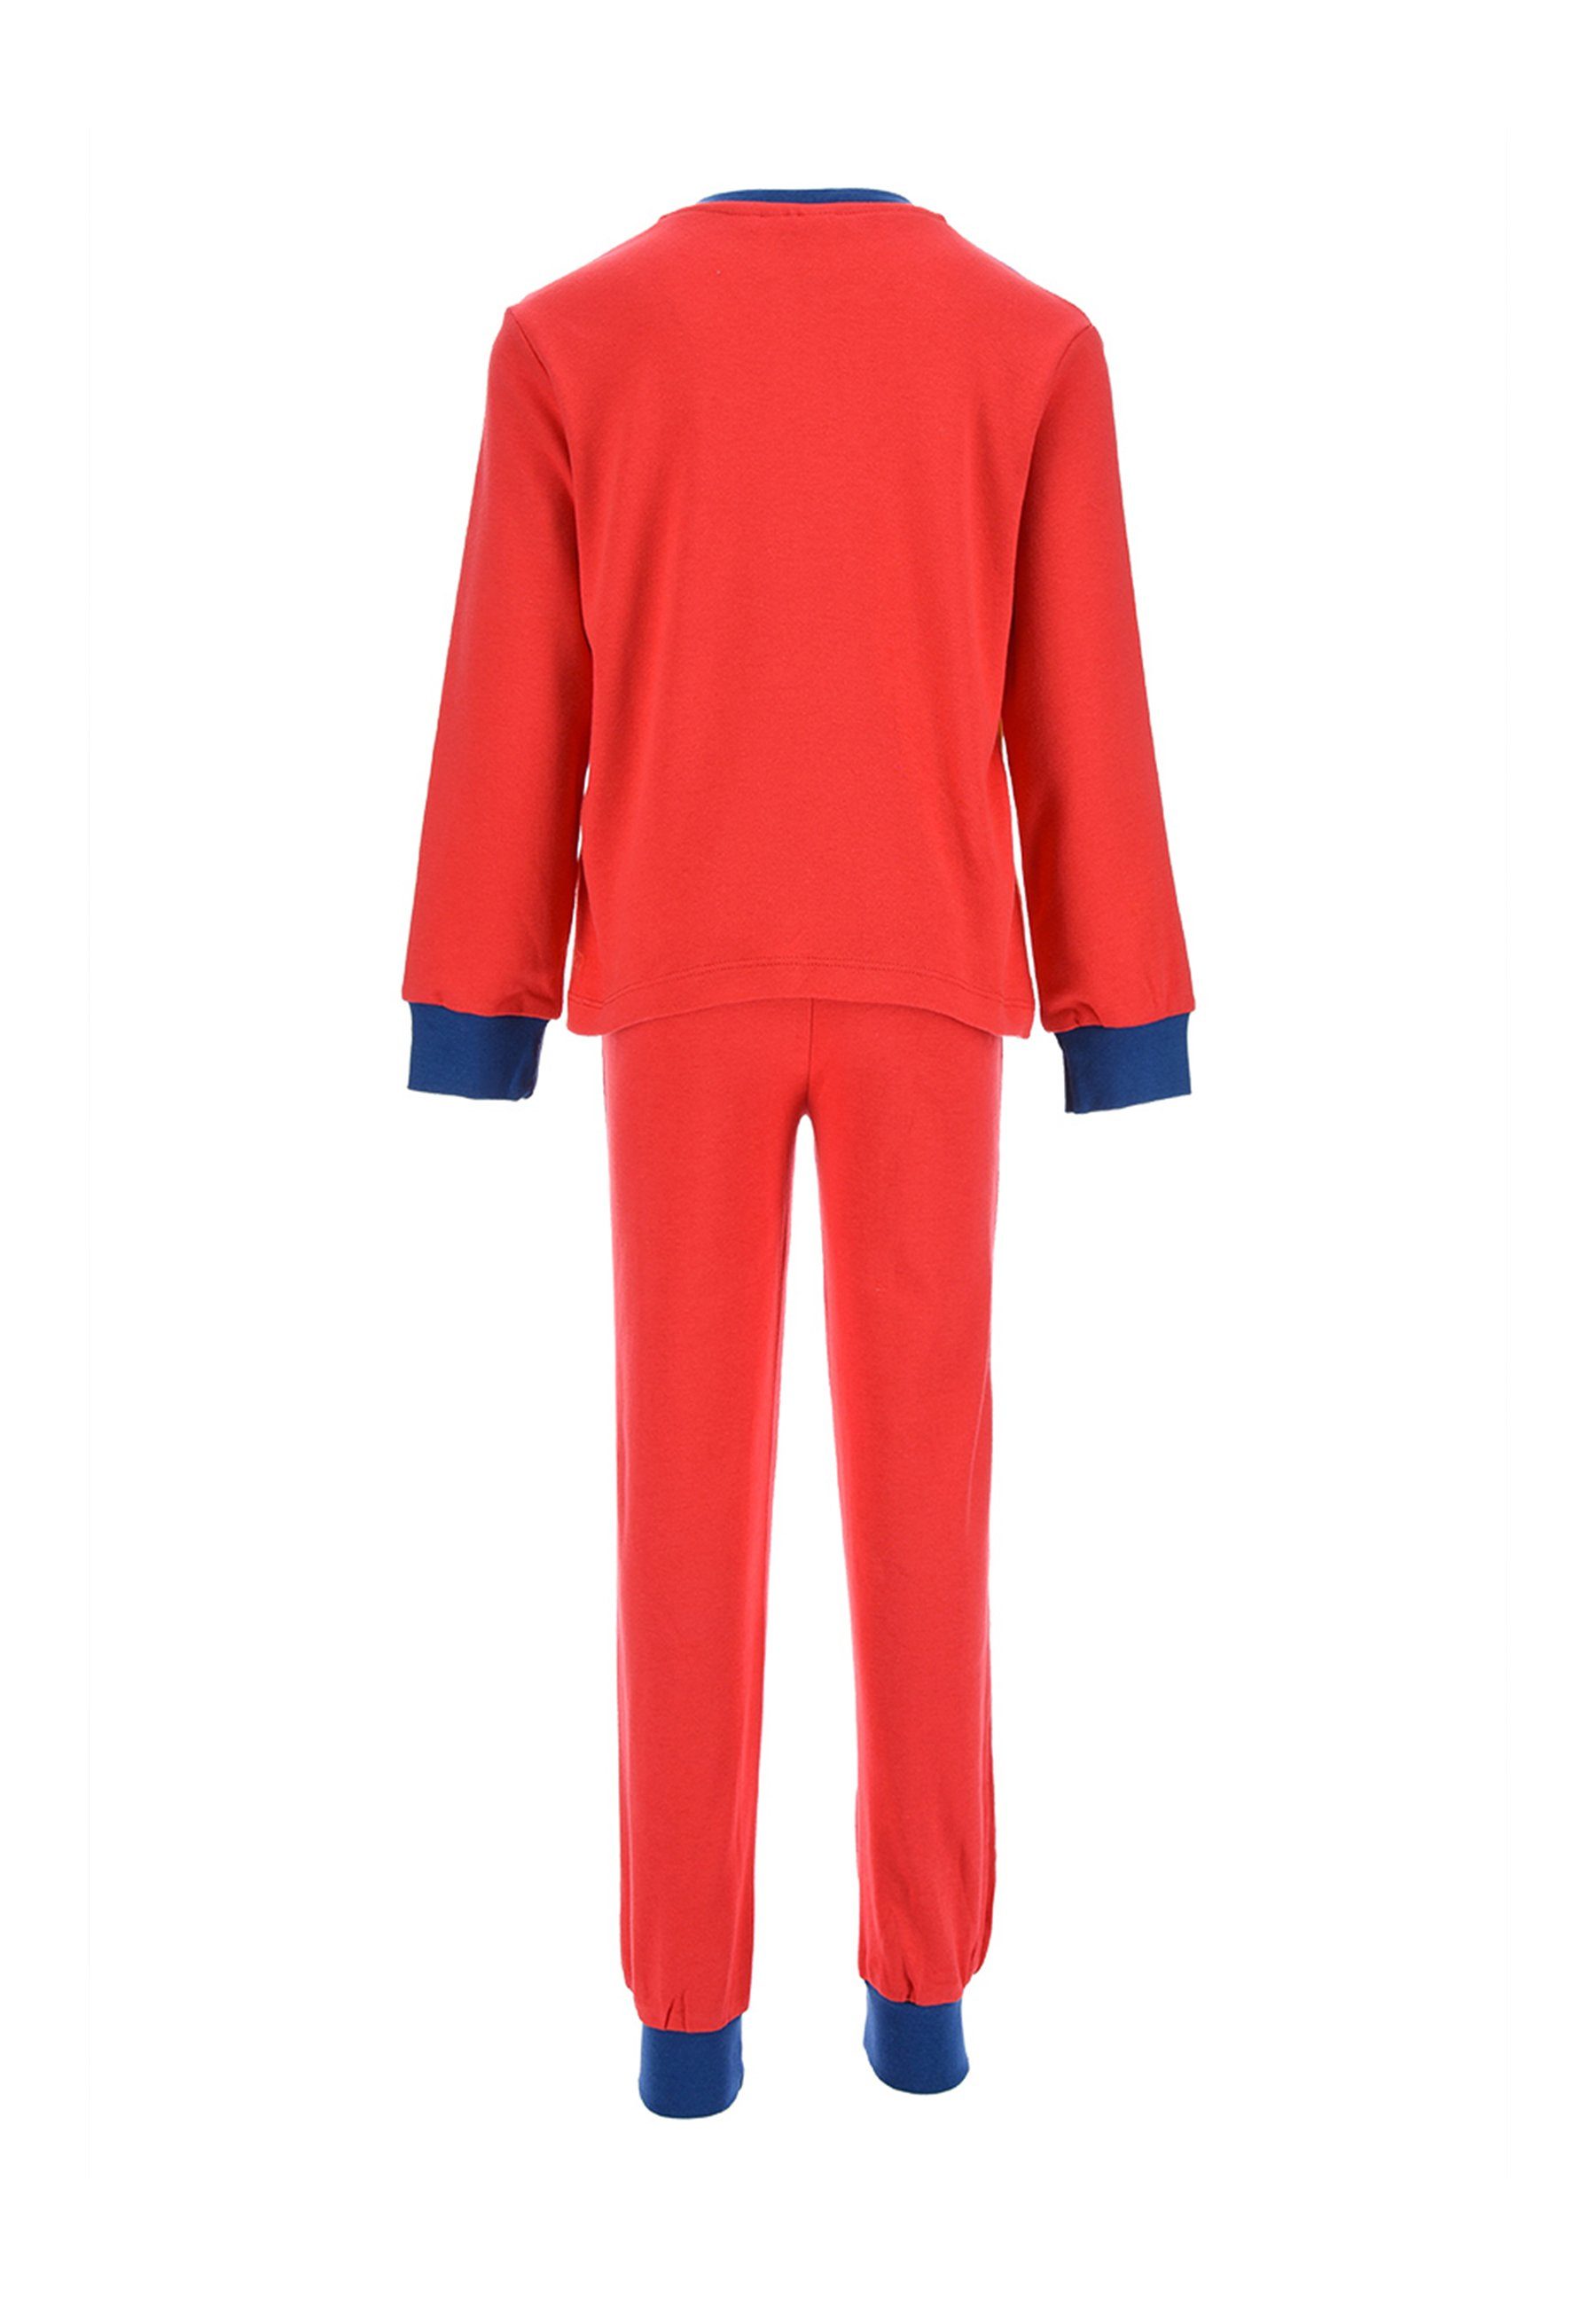 tlg) Kinder Marshall Rot Chase PAW Nachtwäsche (2 PATROL langarm Schlafanzug Jungen Pyjama Rubble